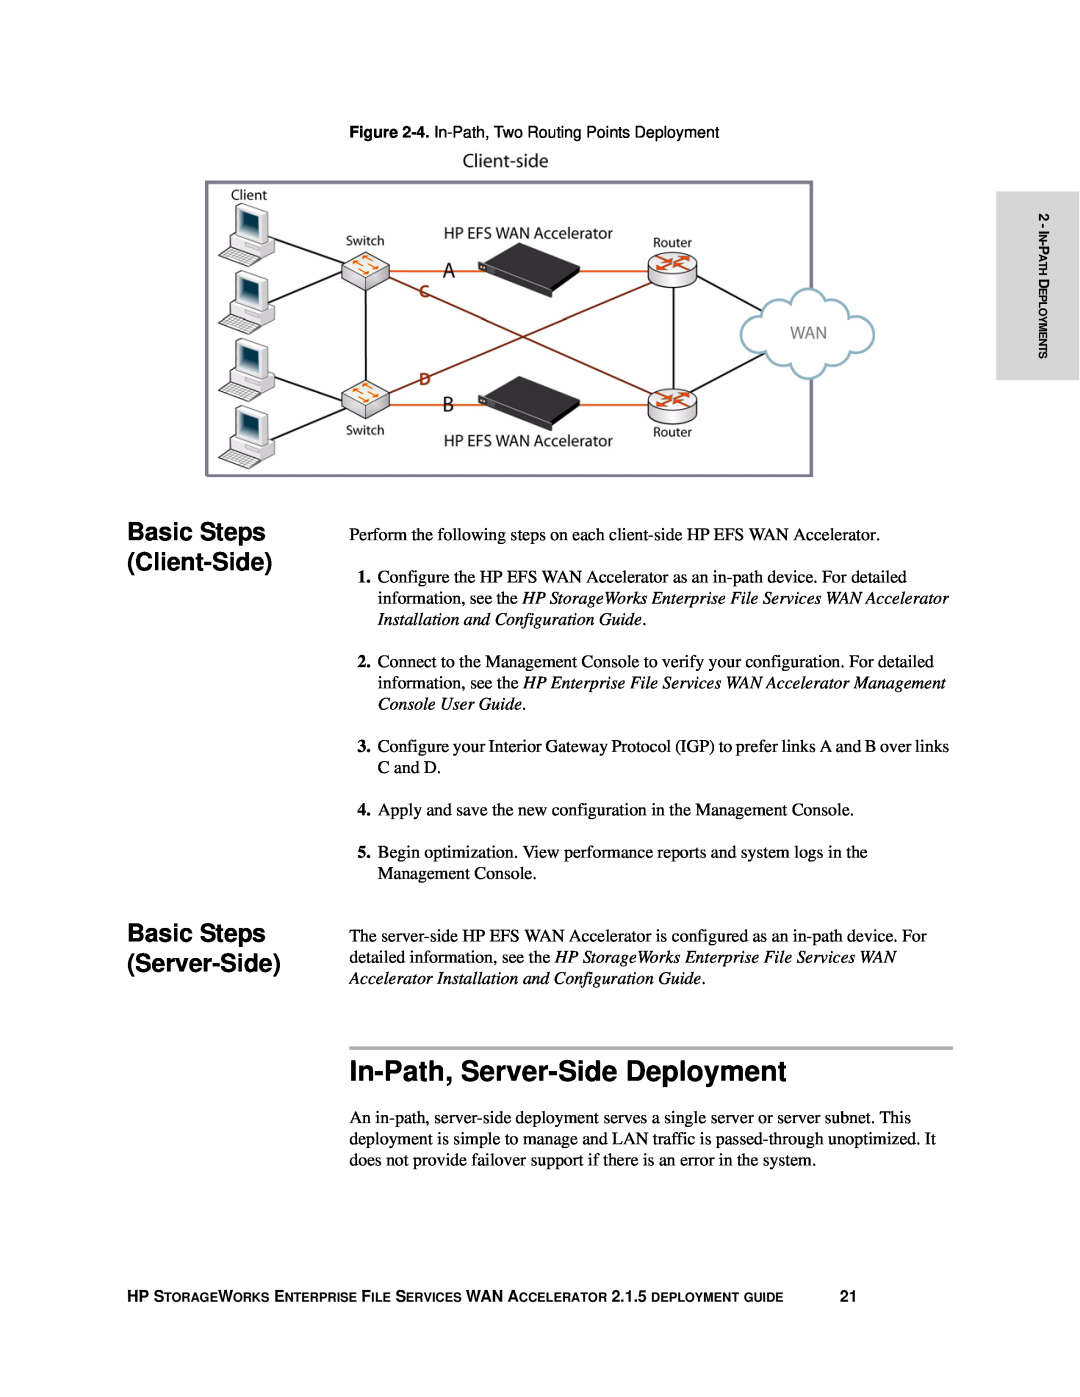 HP Enterprise File Services WAN Accelerator manual In-Path, Server-Side Deployment 